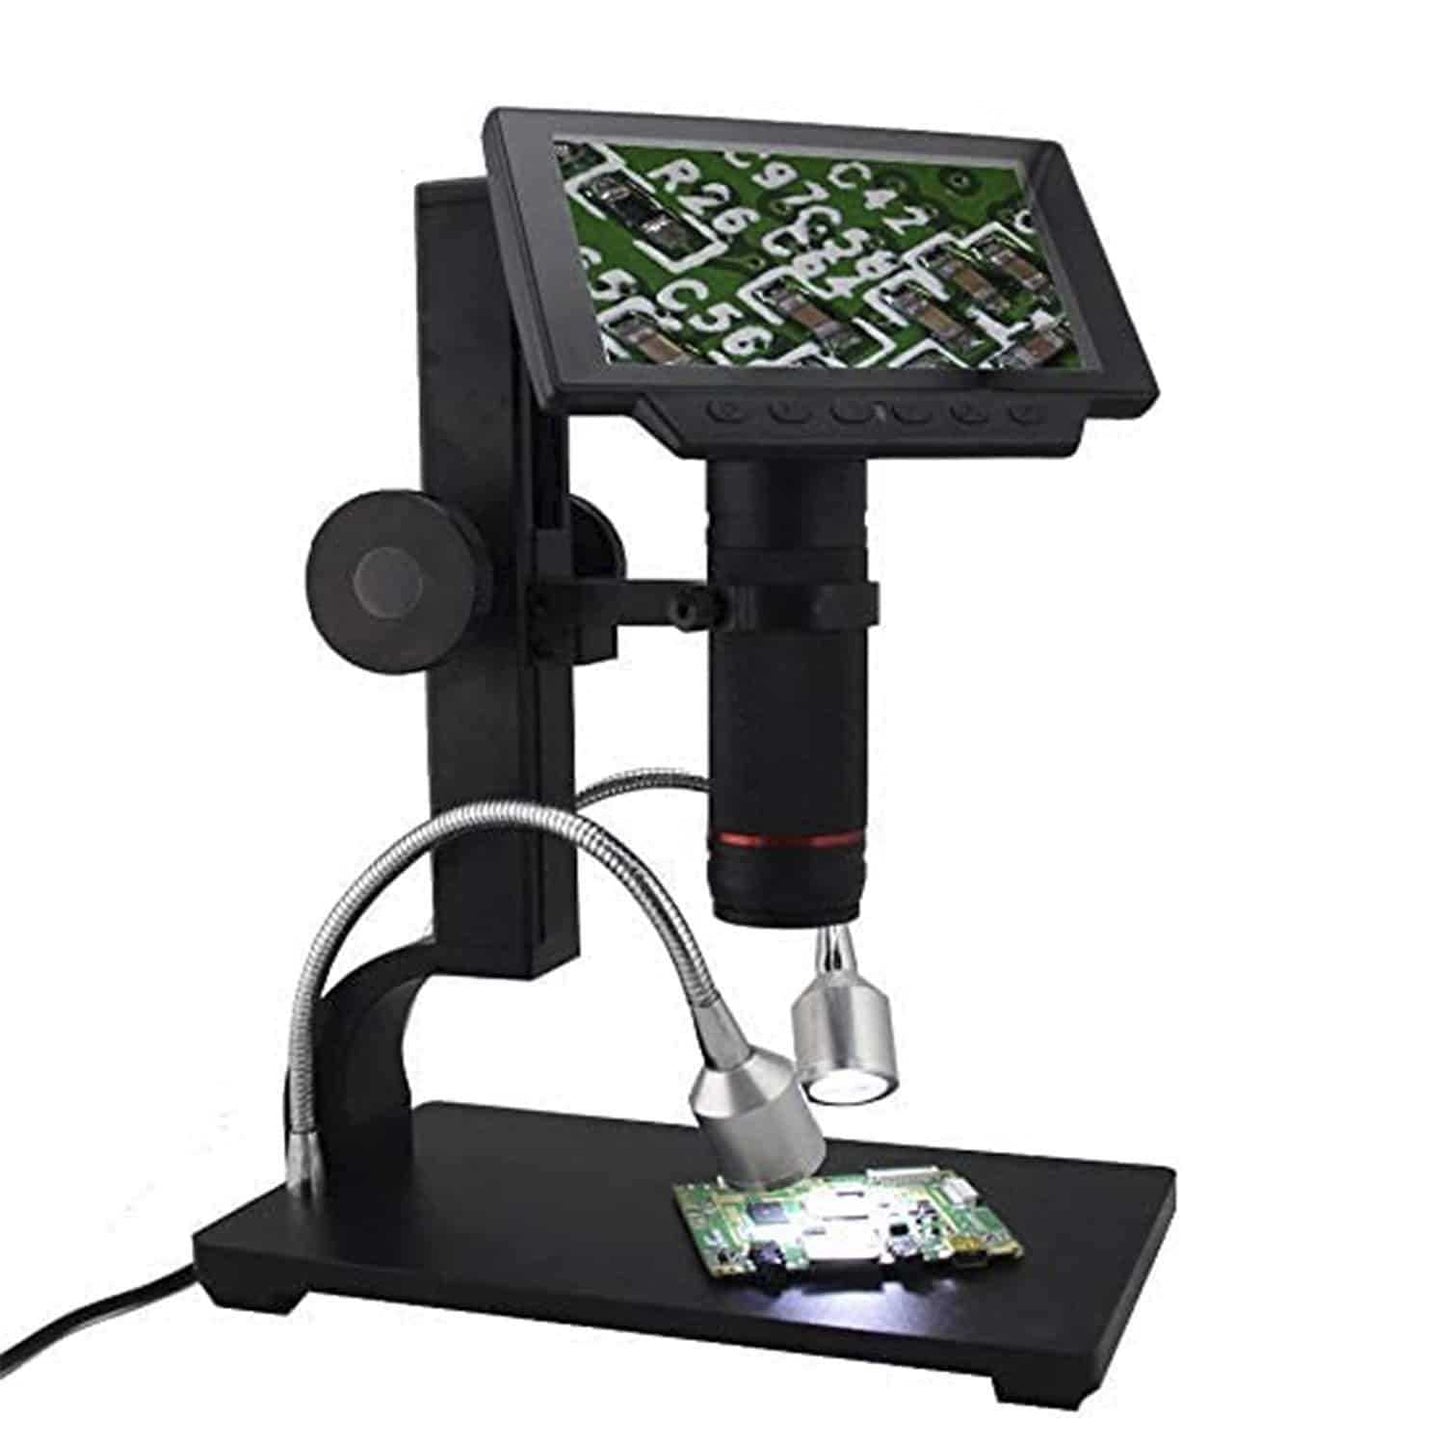 Andonstar ADSM302 560X HDMI Digital Microscope - Andonstar